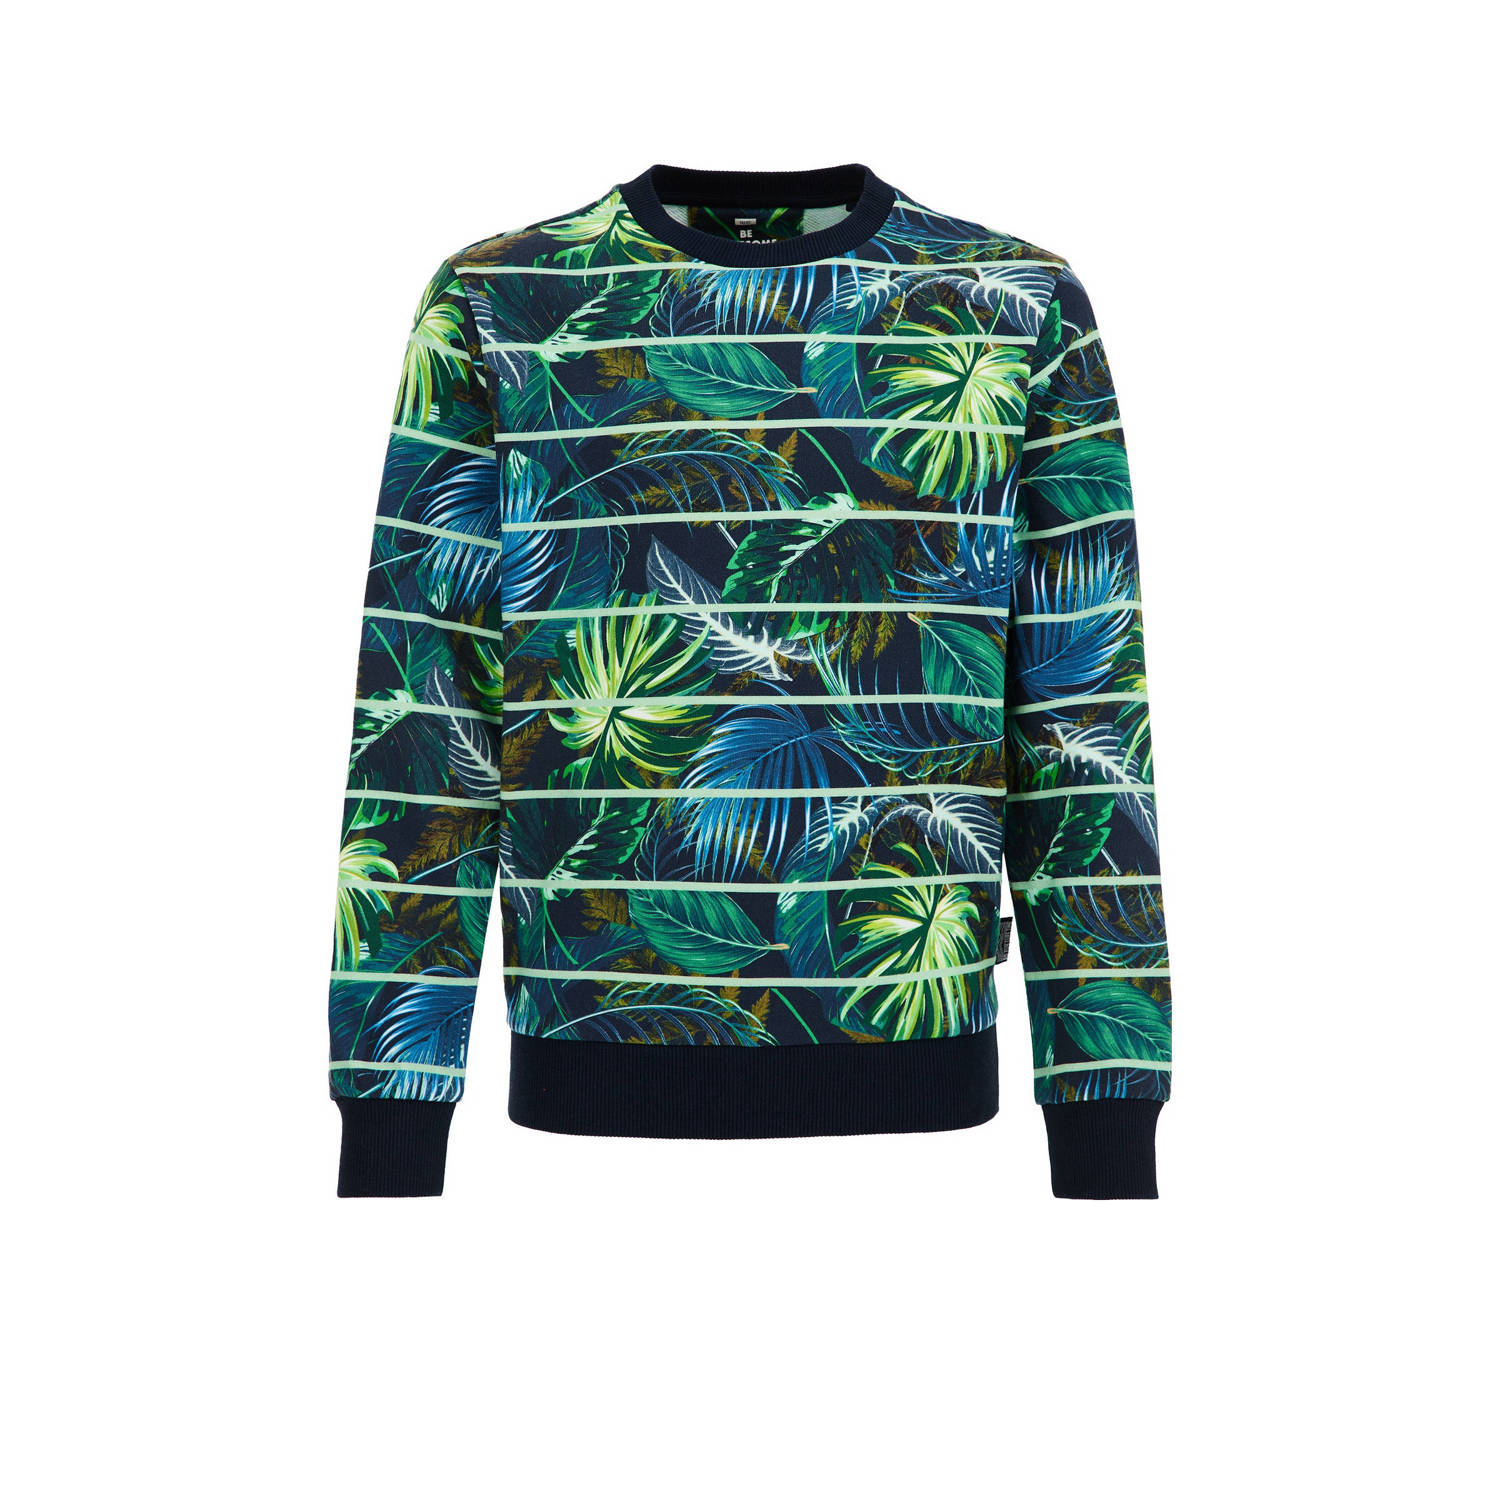 WE Fashion sweater met all over print groen blauw zwart